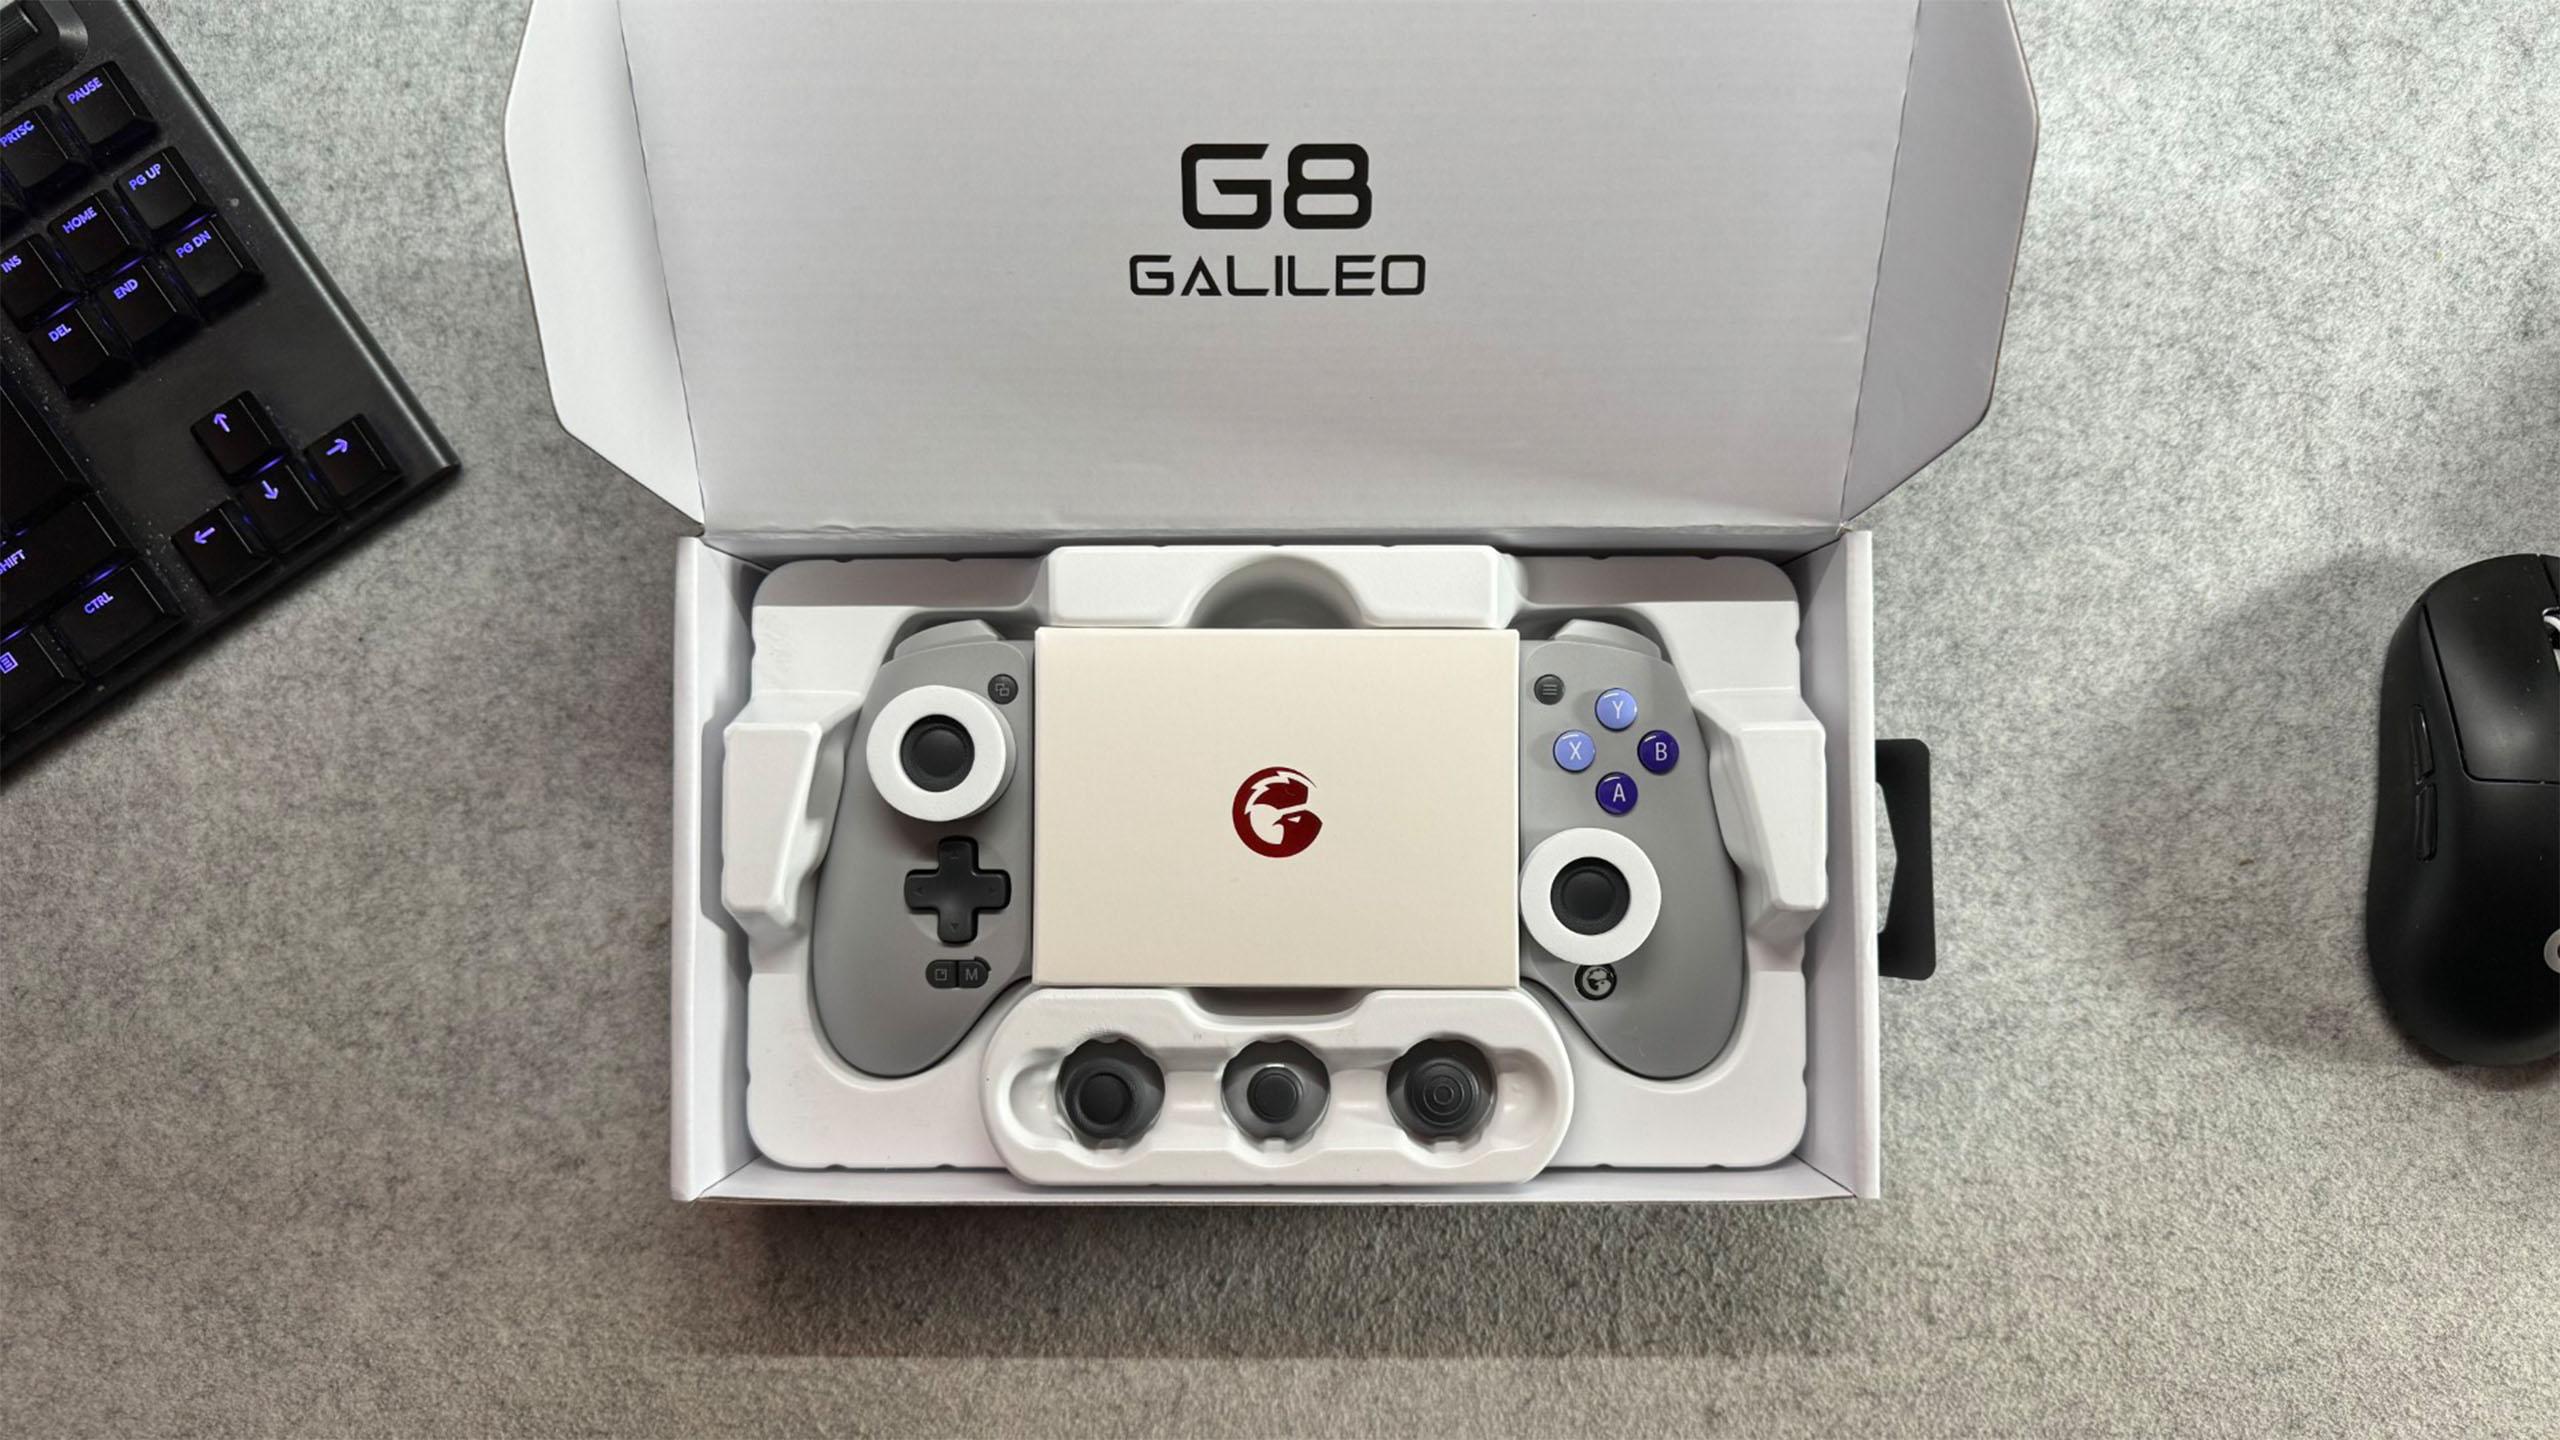 GameSir G8 Galileo Mobile Game Controller Review